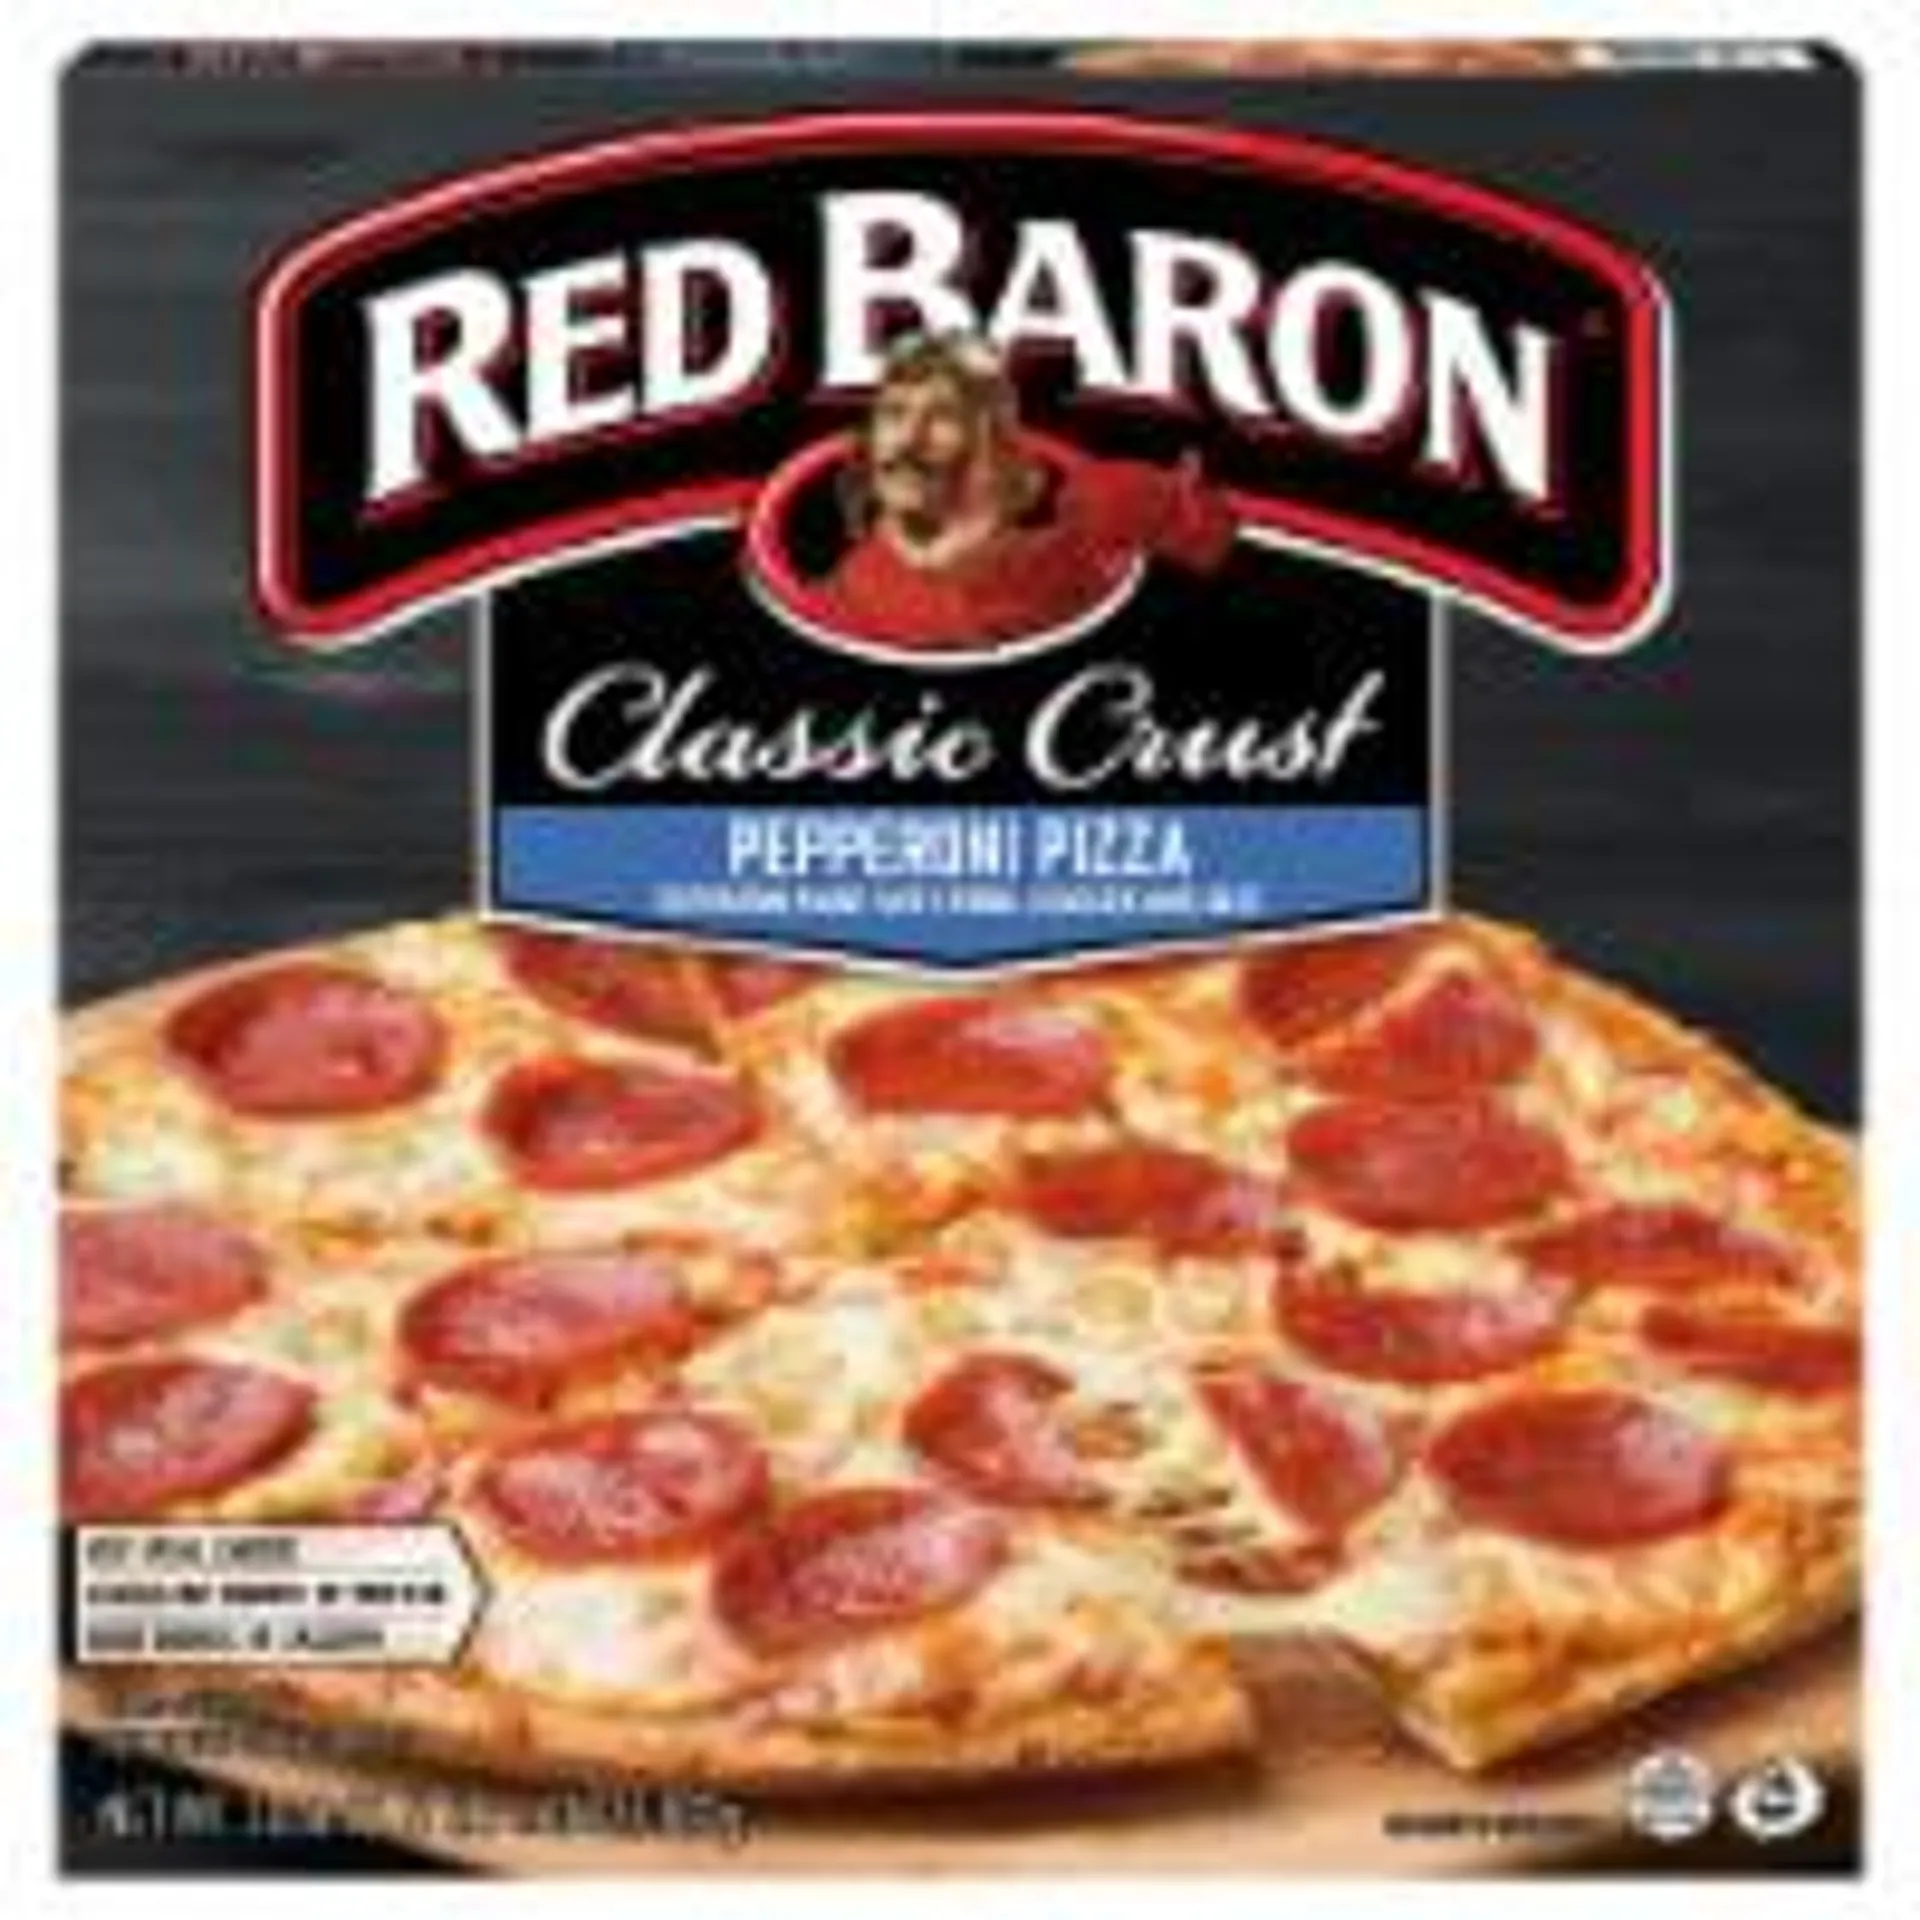 Red Baron Frozen Pizza Classic Crust Pepperoni